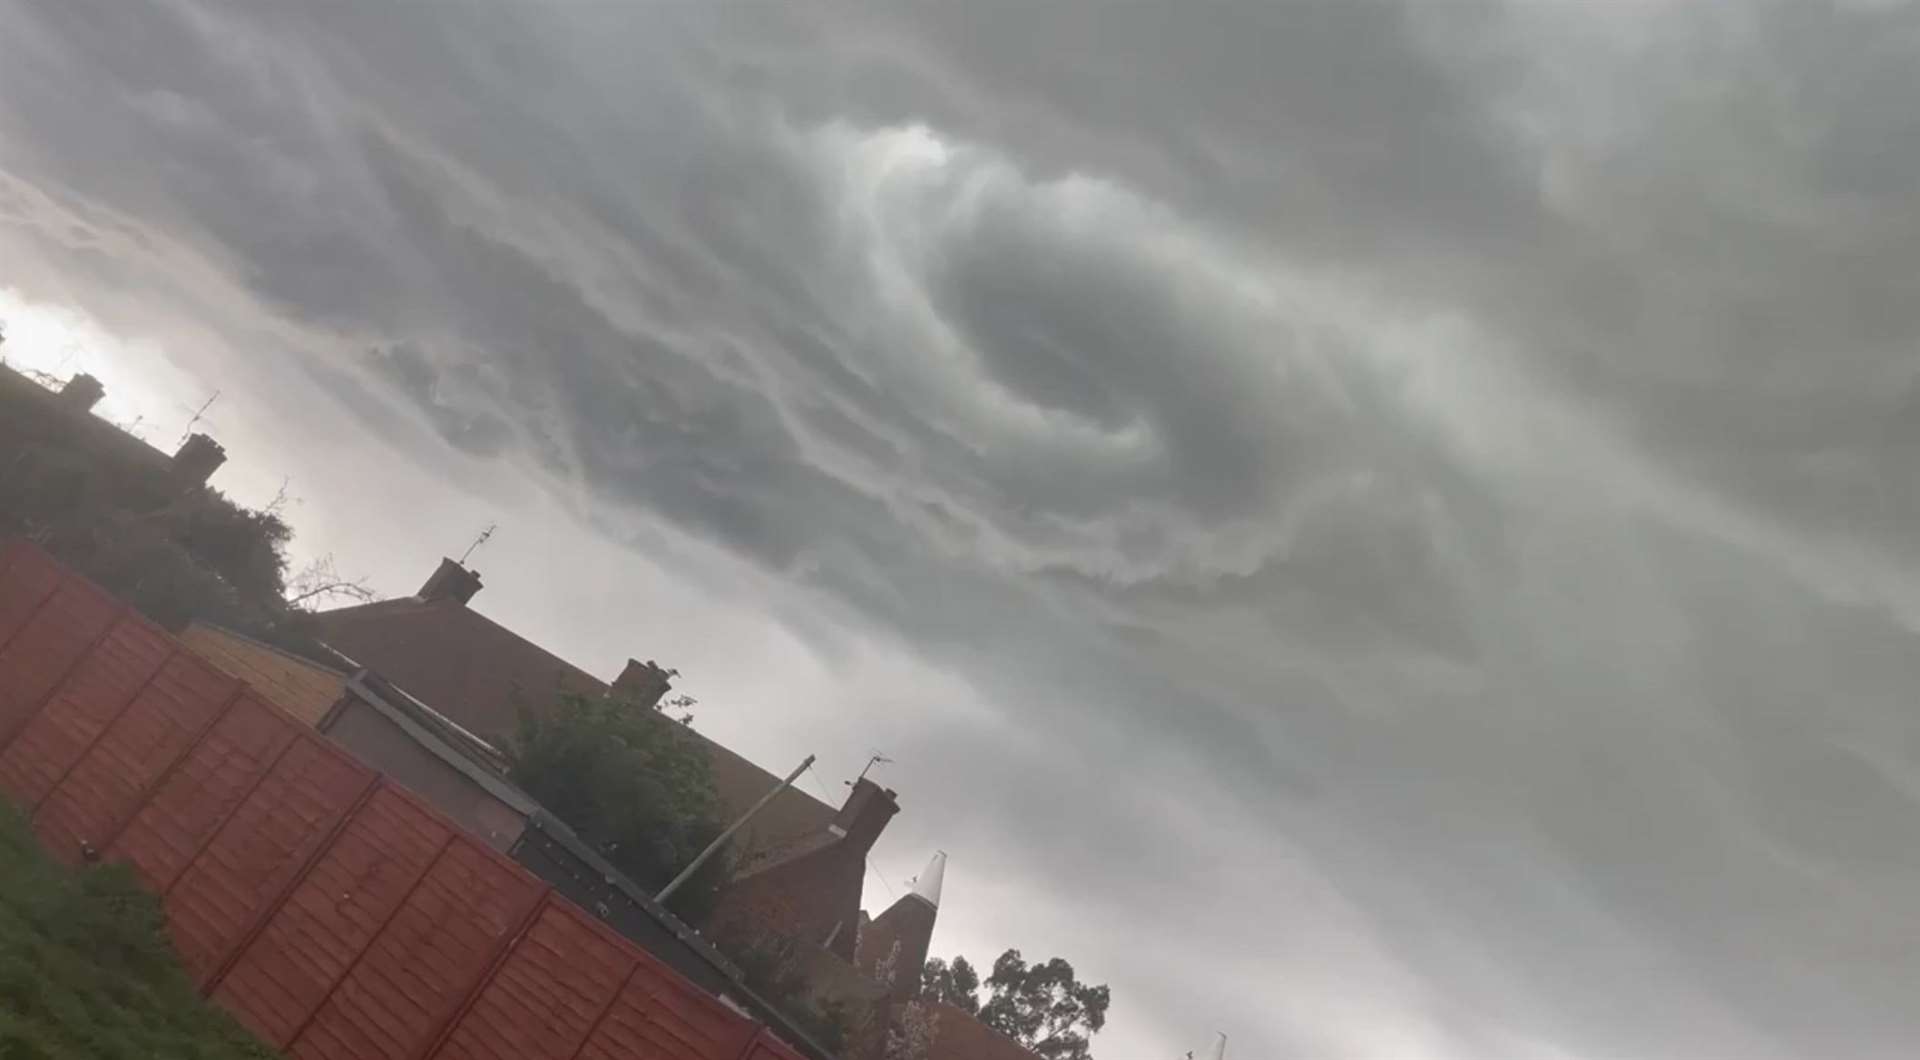 Megan Crankshaw captured the funnel cloud in Newington earlier this week